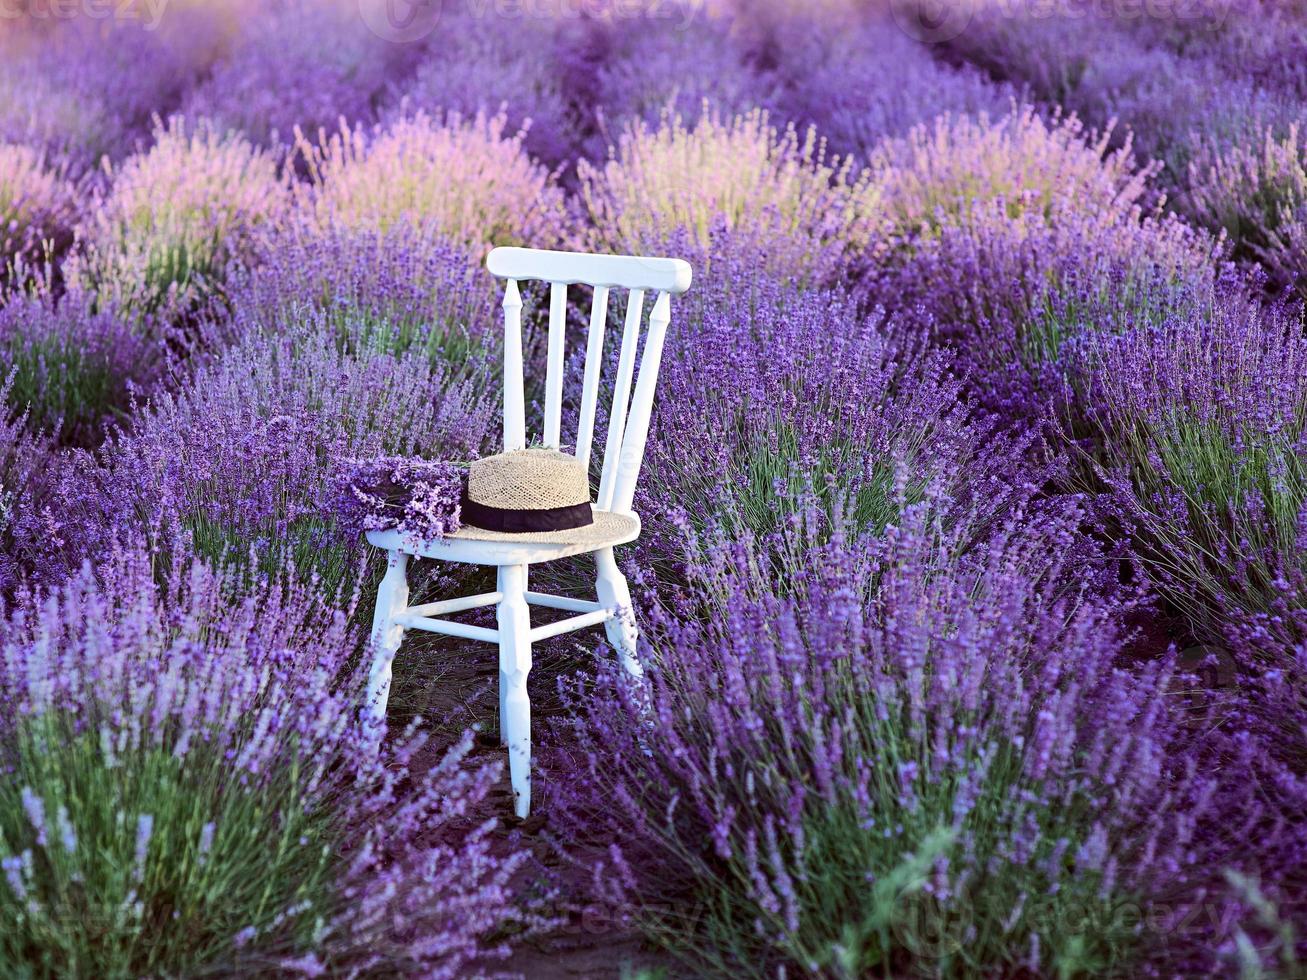 vit stol med bukett lavendel och stråhatt på vackra lavendelblommor blommar. resa, natur, sommar, jordbruk koncept foto